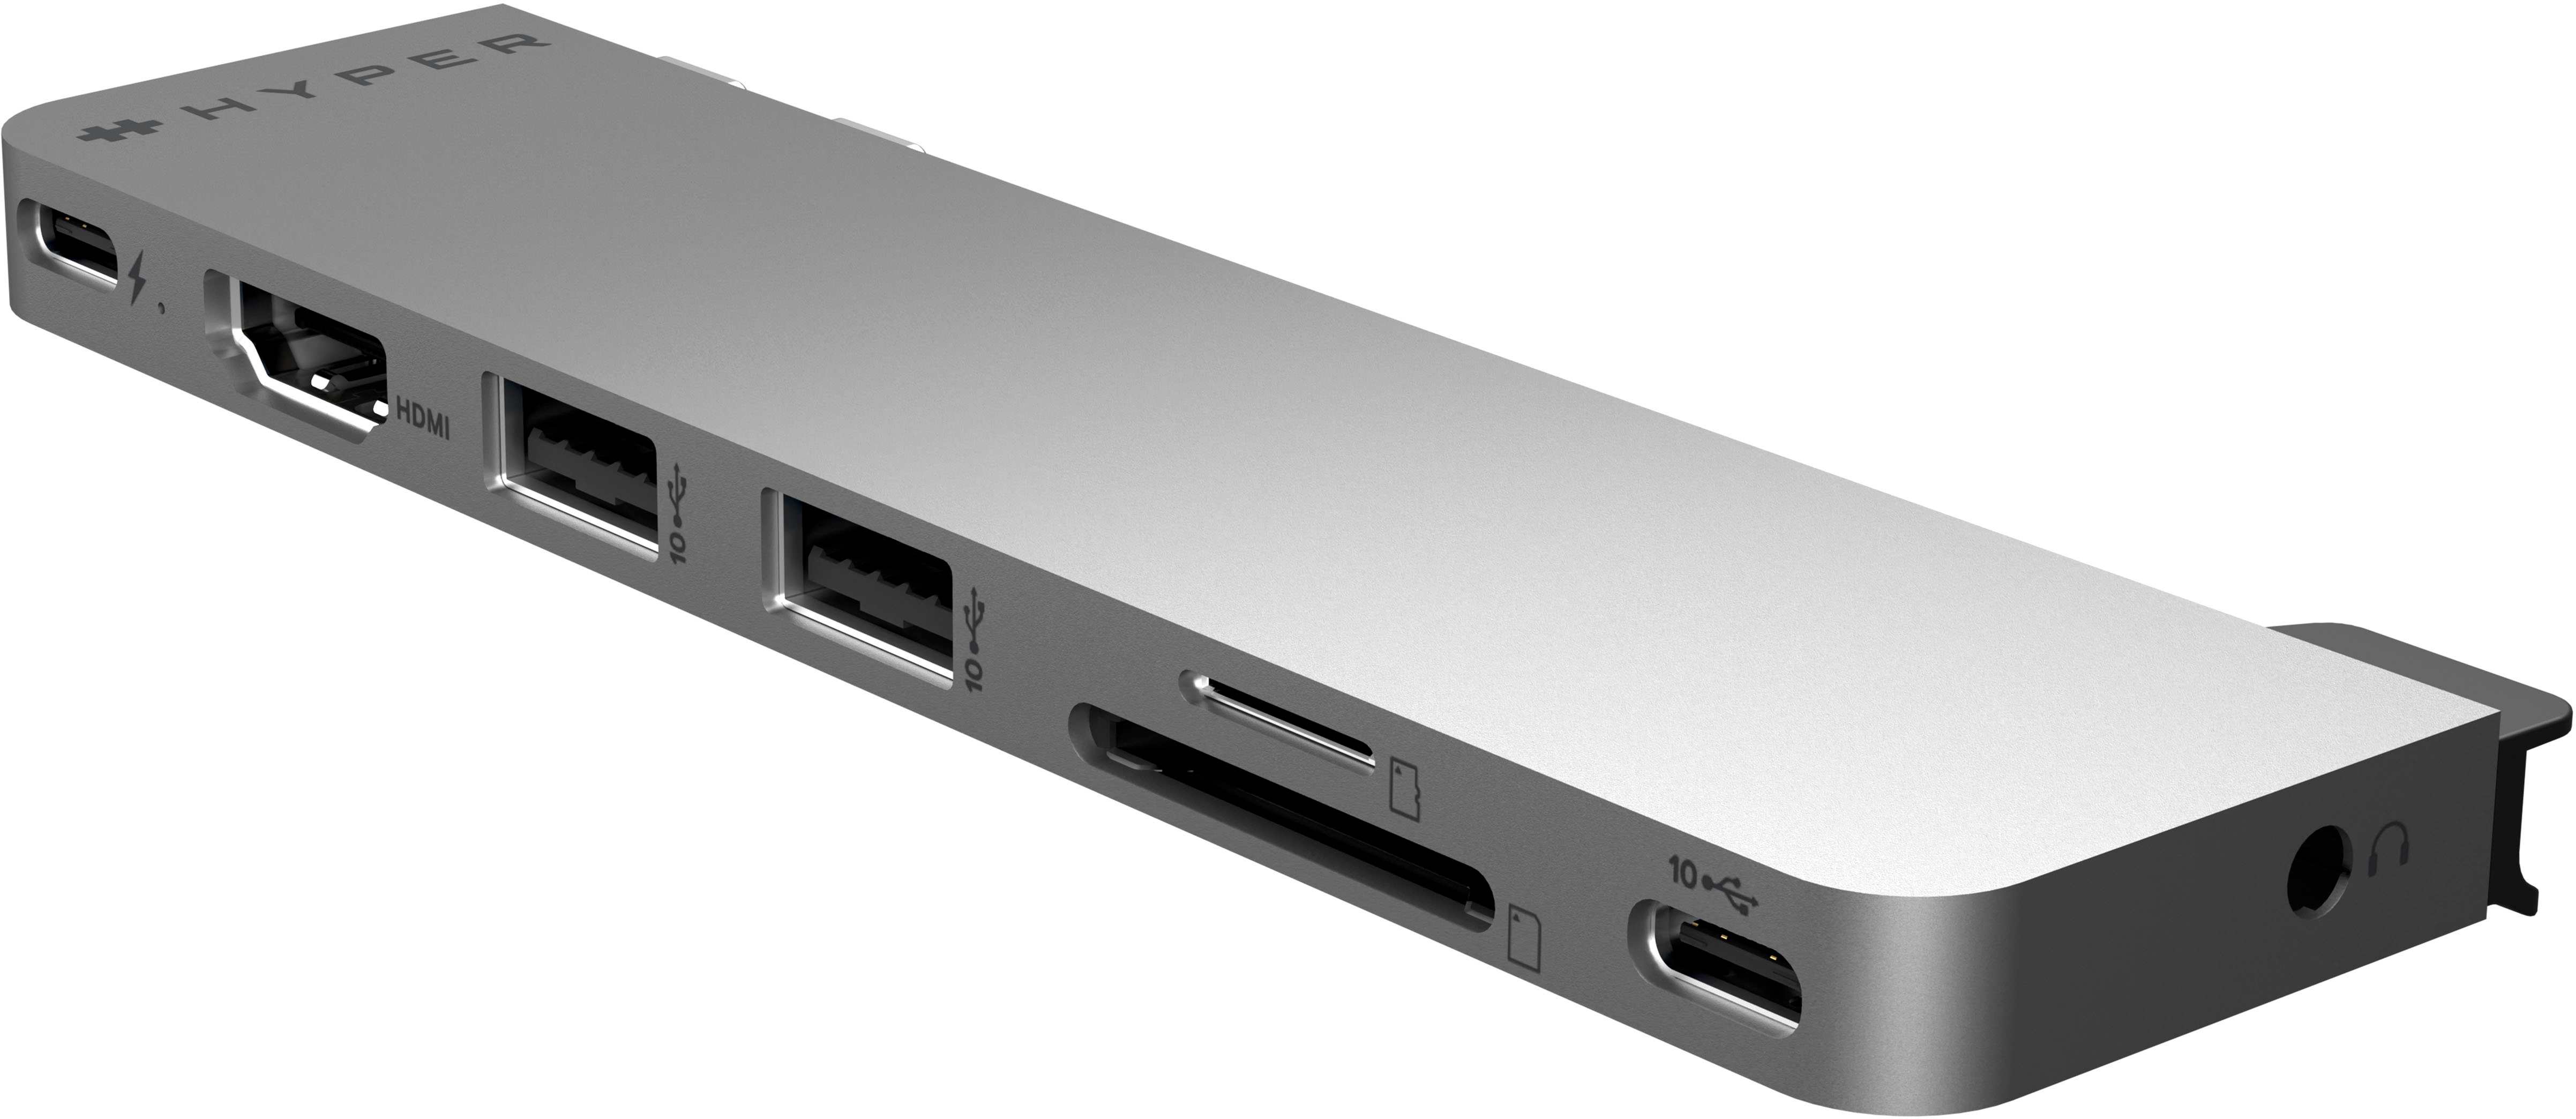 Midwest Photo HyperDrive Thunderbolt 3 USB-C Hub - Silver